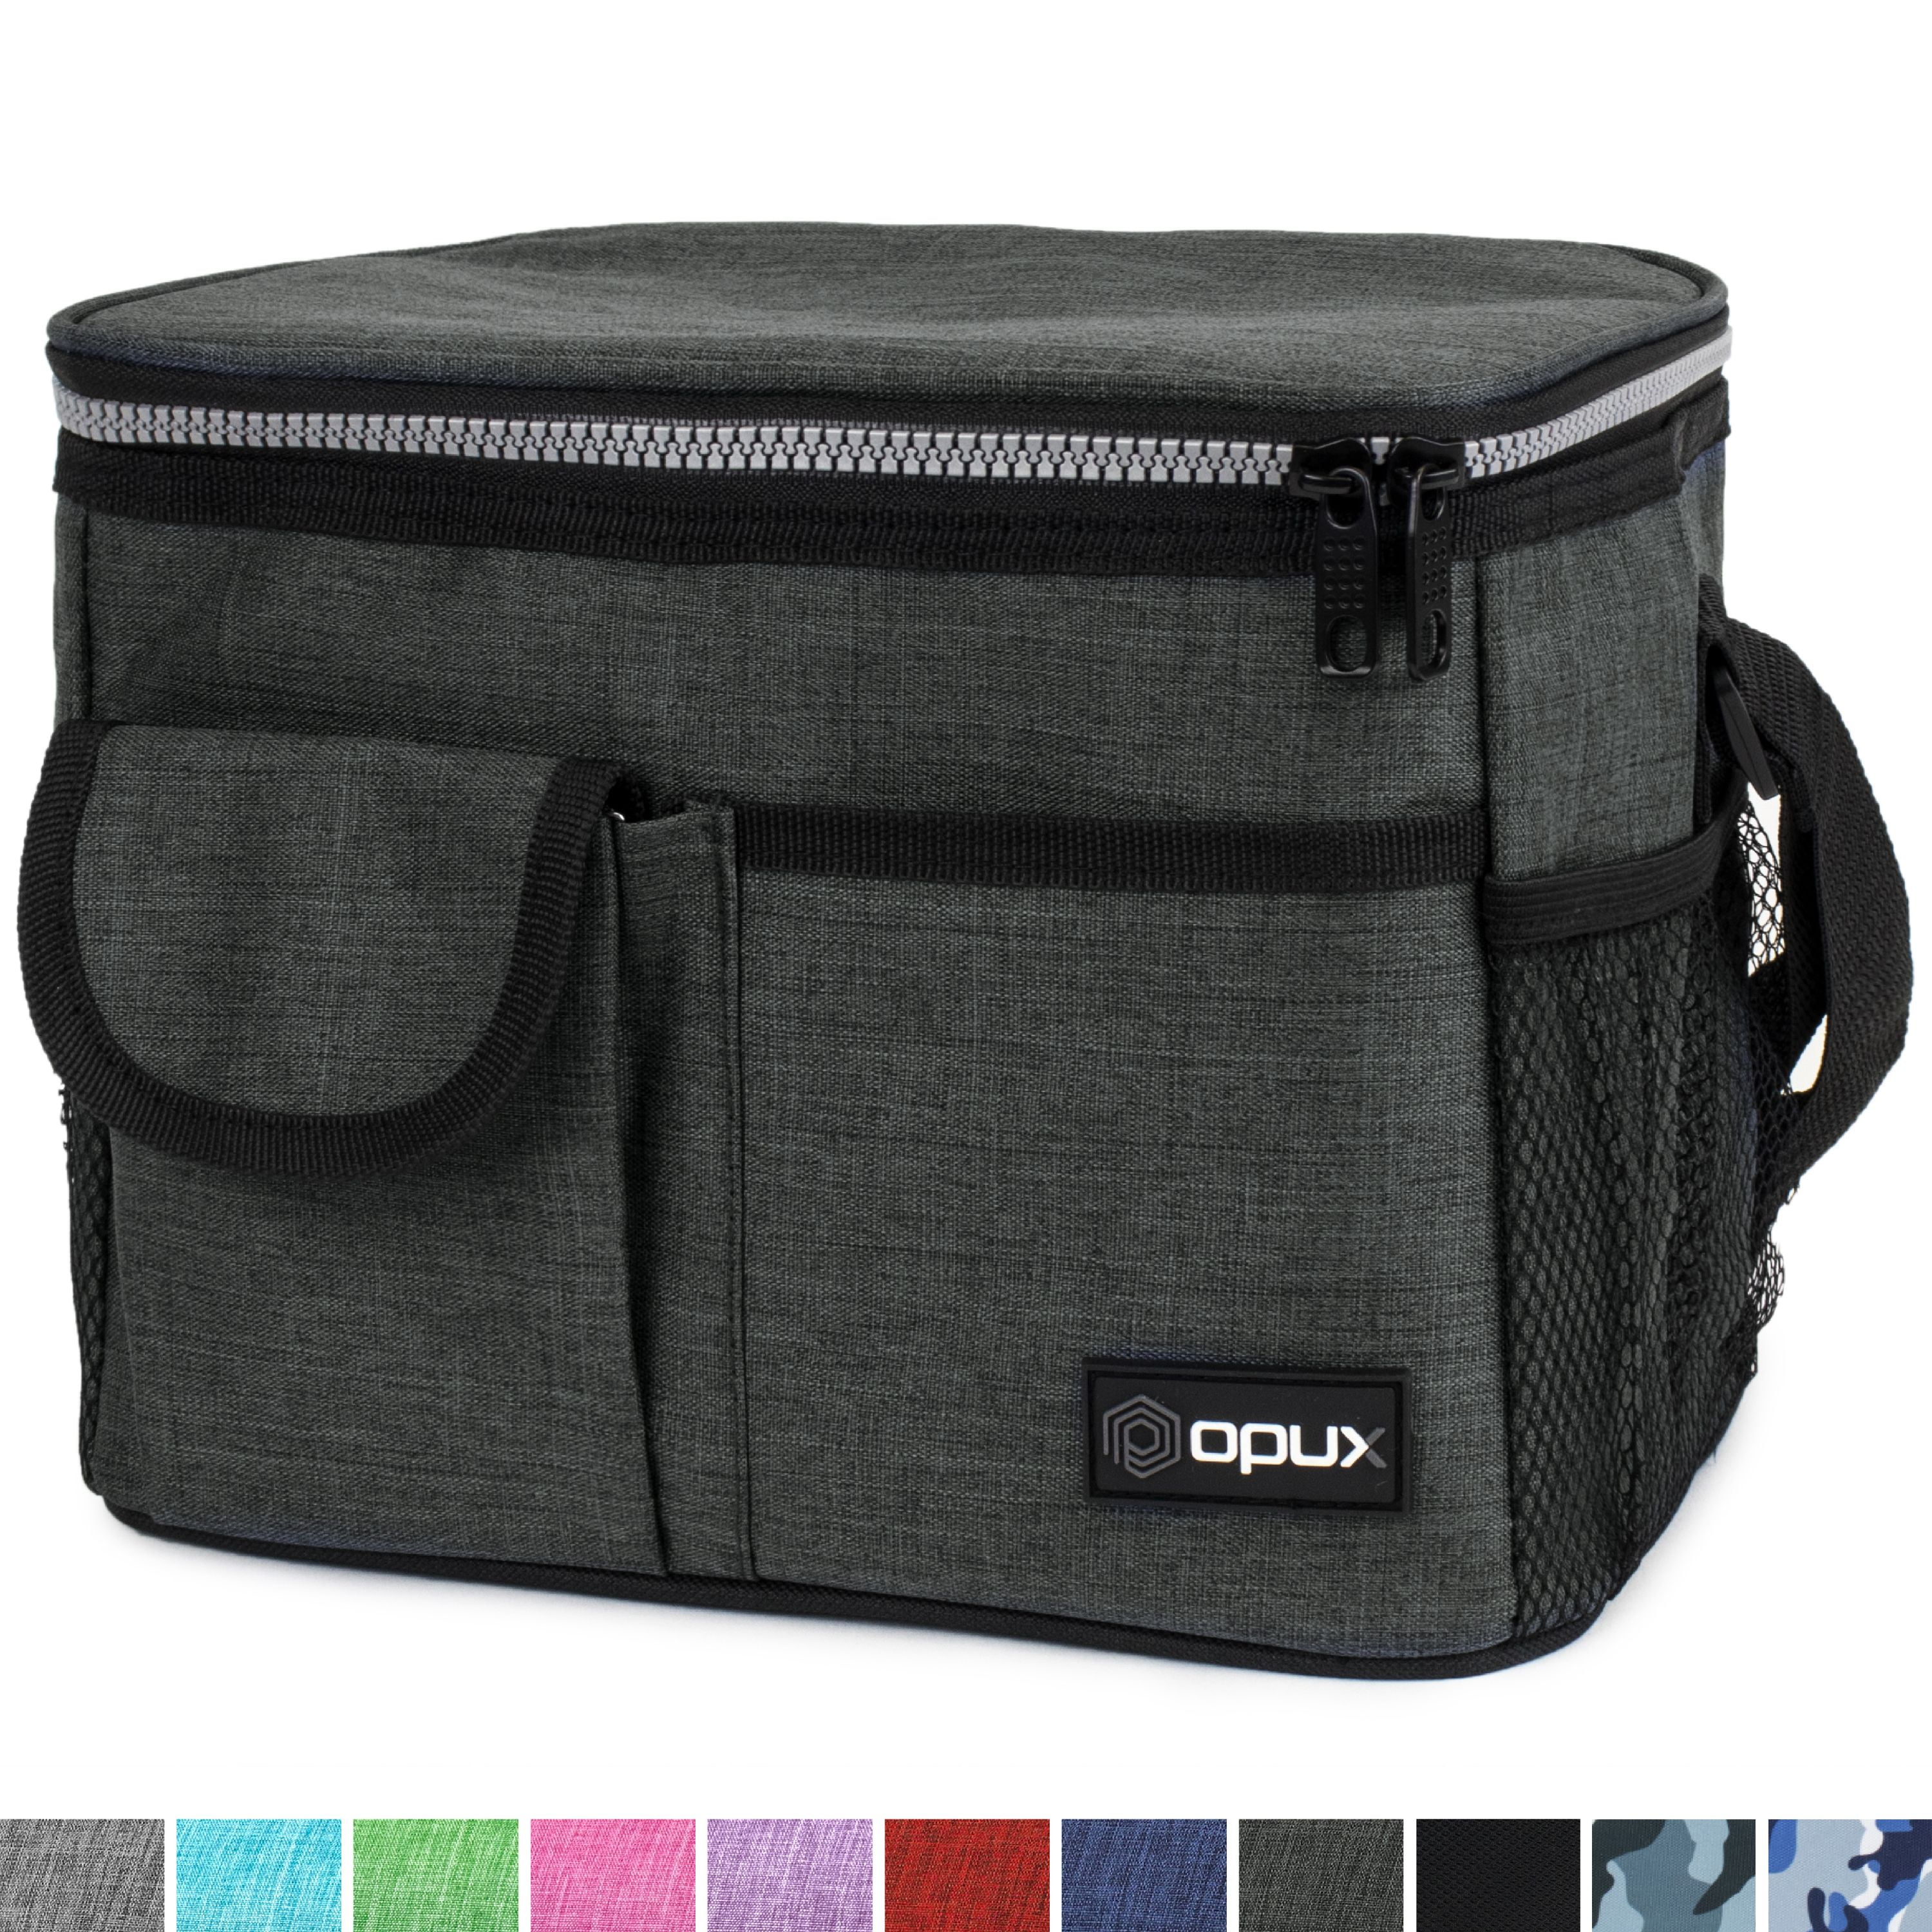 OPUX Lunch Bag Insulated Lunch Box for Women, Men, Kids | Medium ...